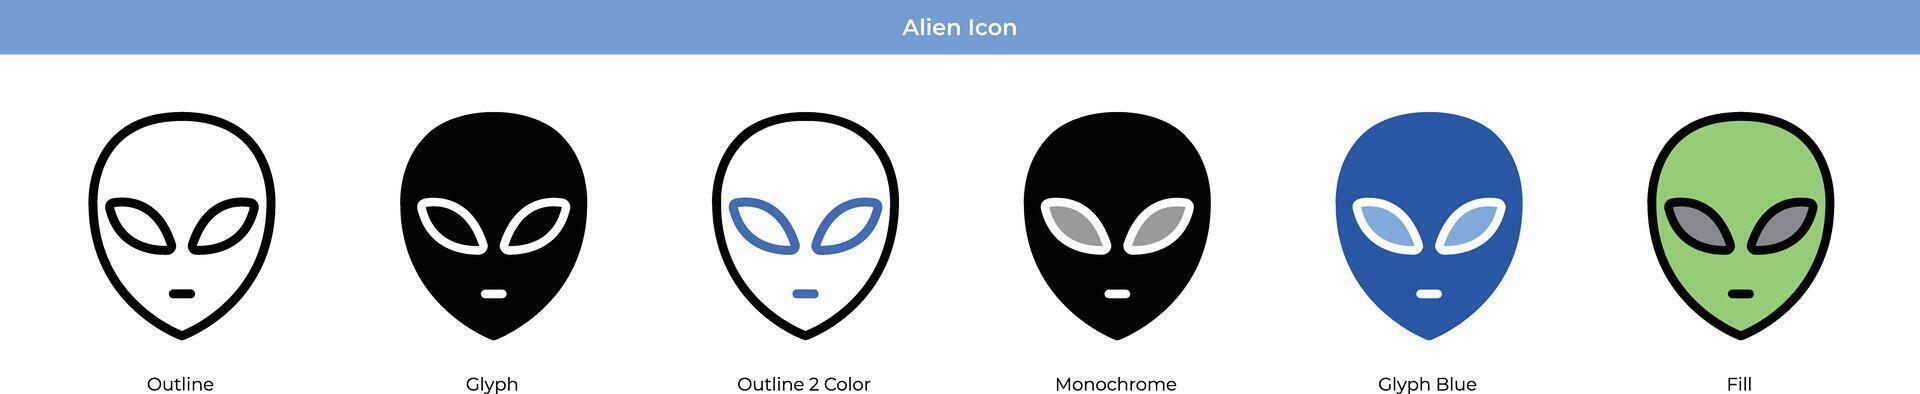 Alien Icon Set vector